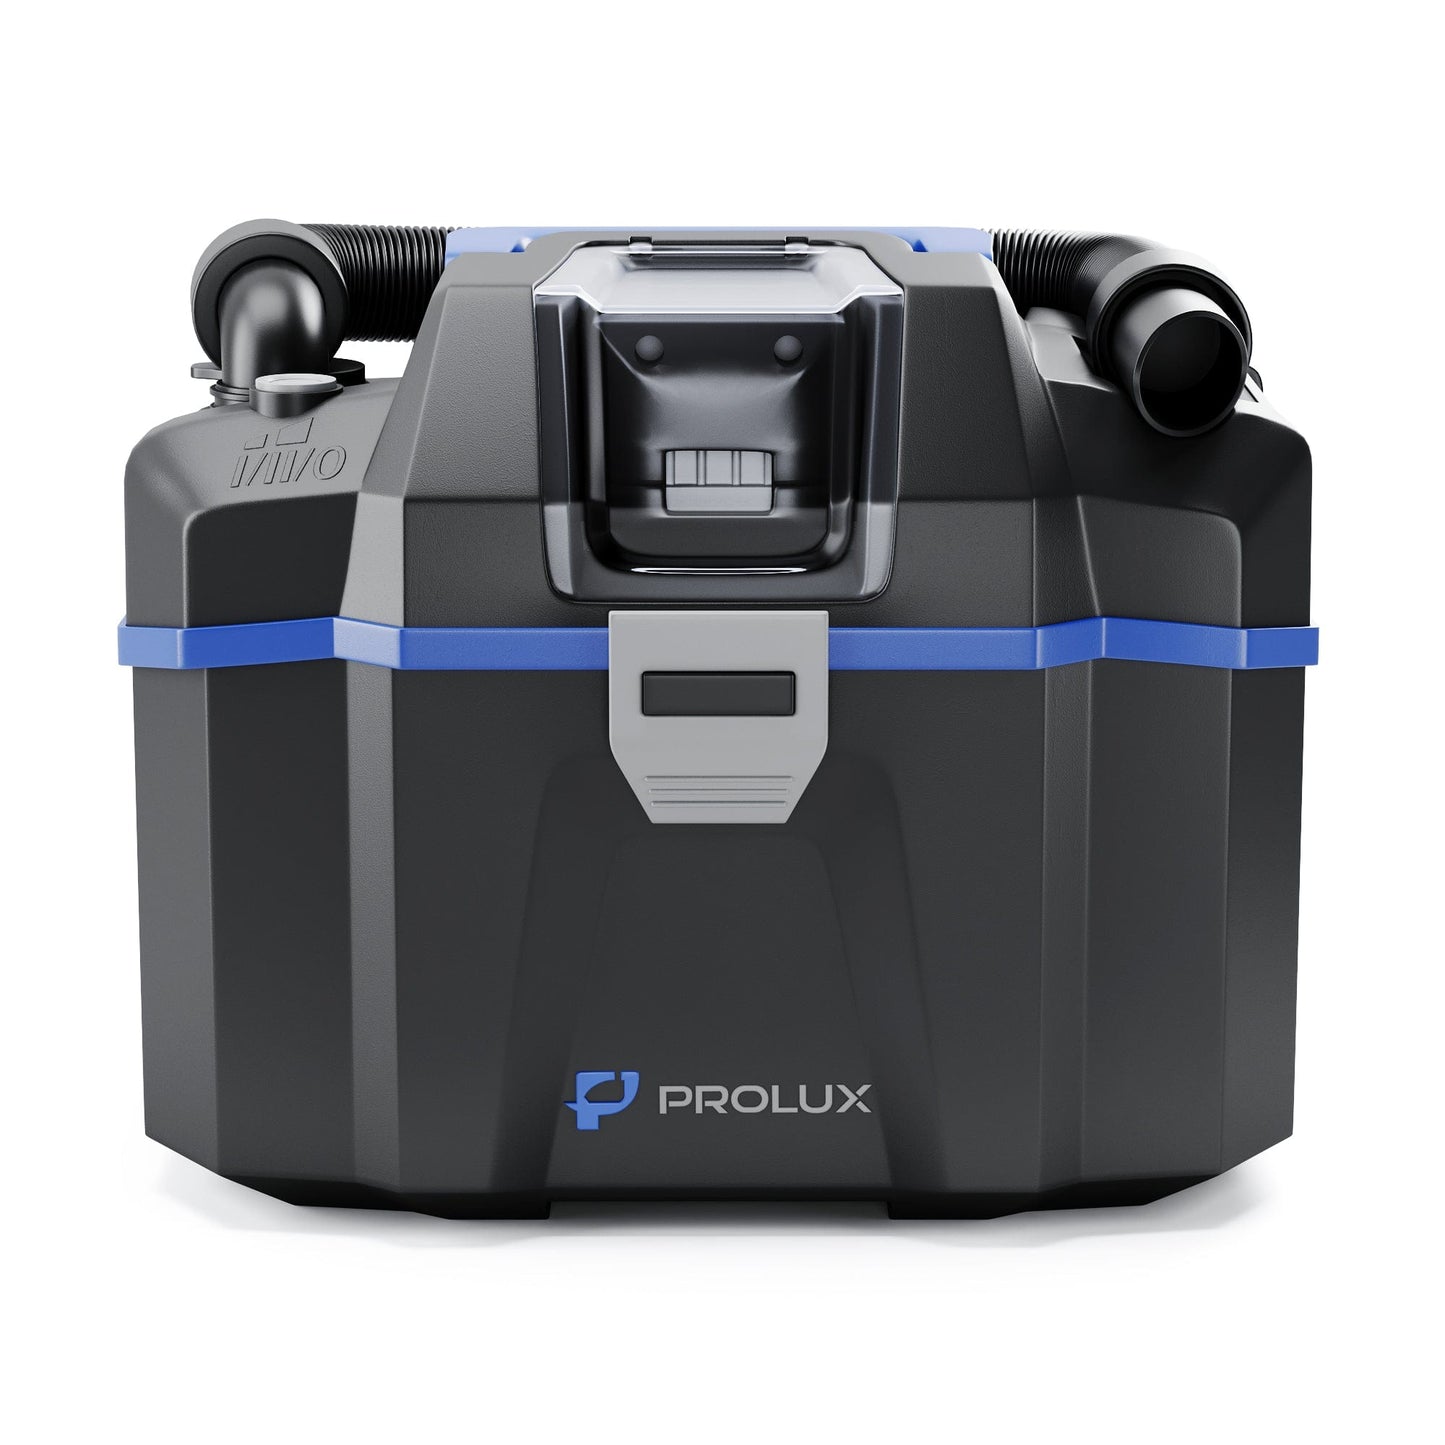 Prolux Cordless Wet/Dry Tool & Travel Vacuum